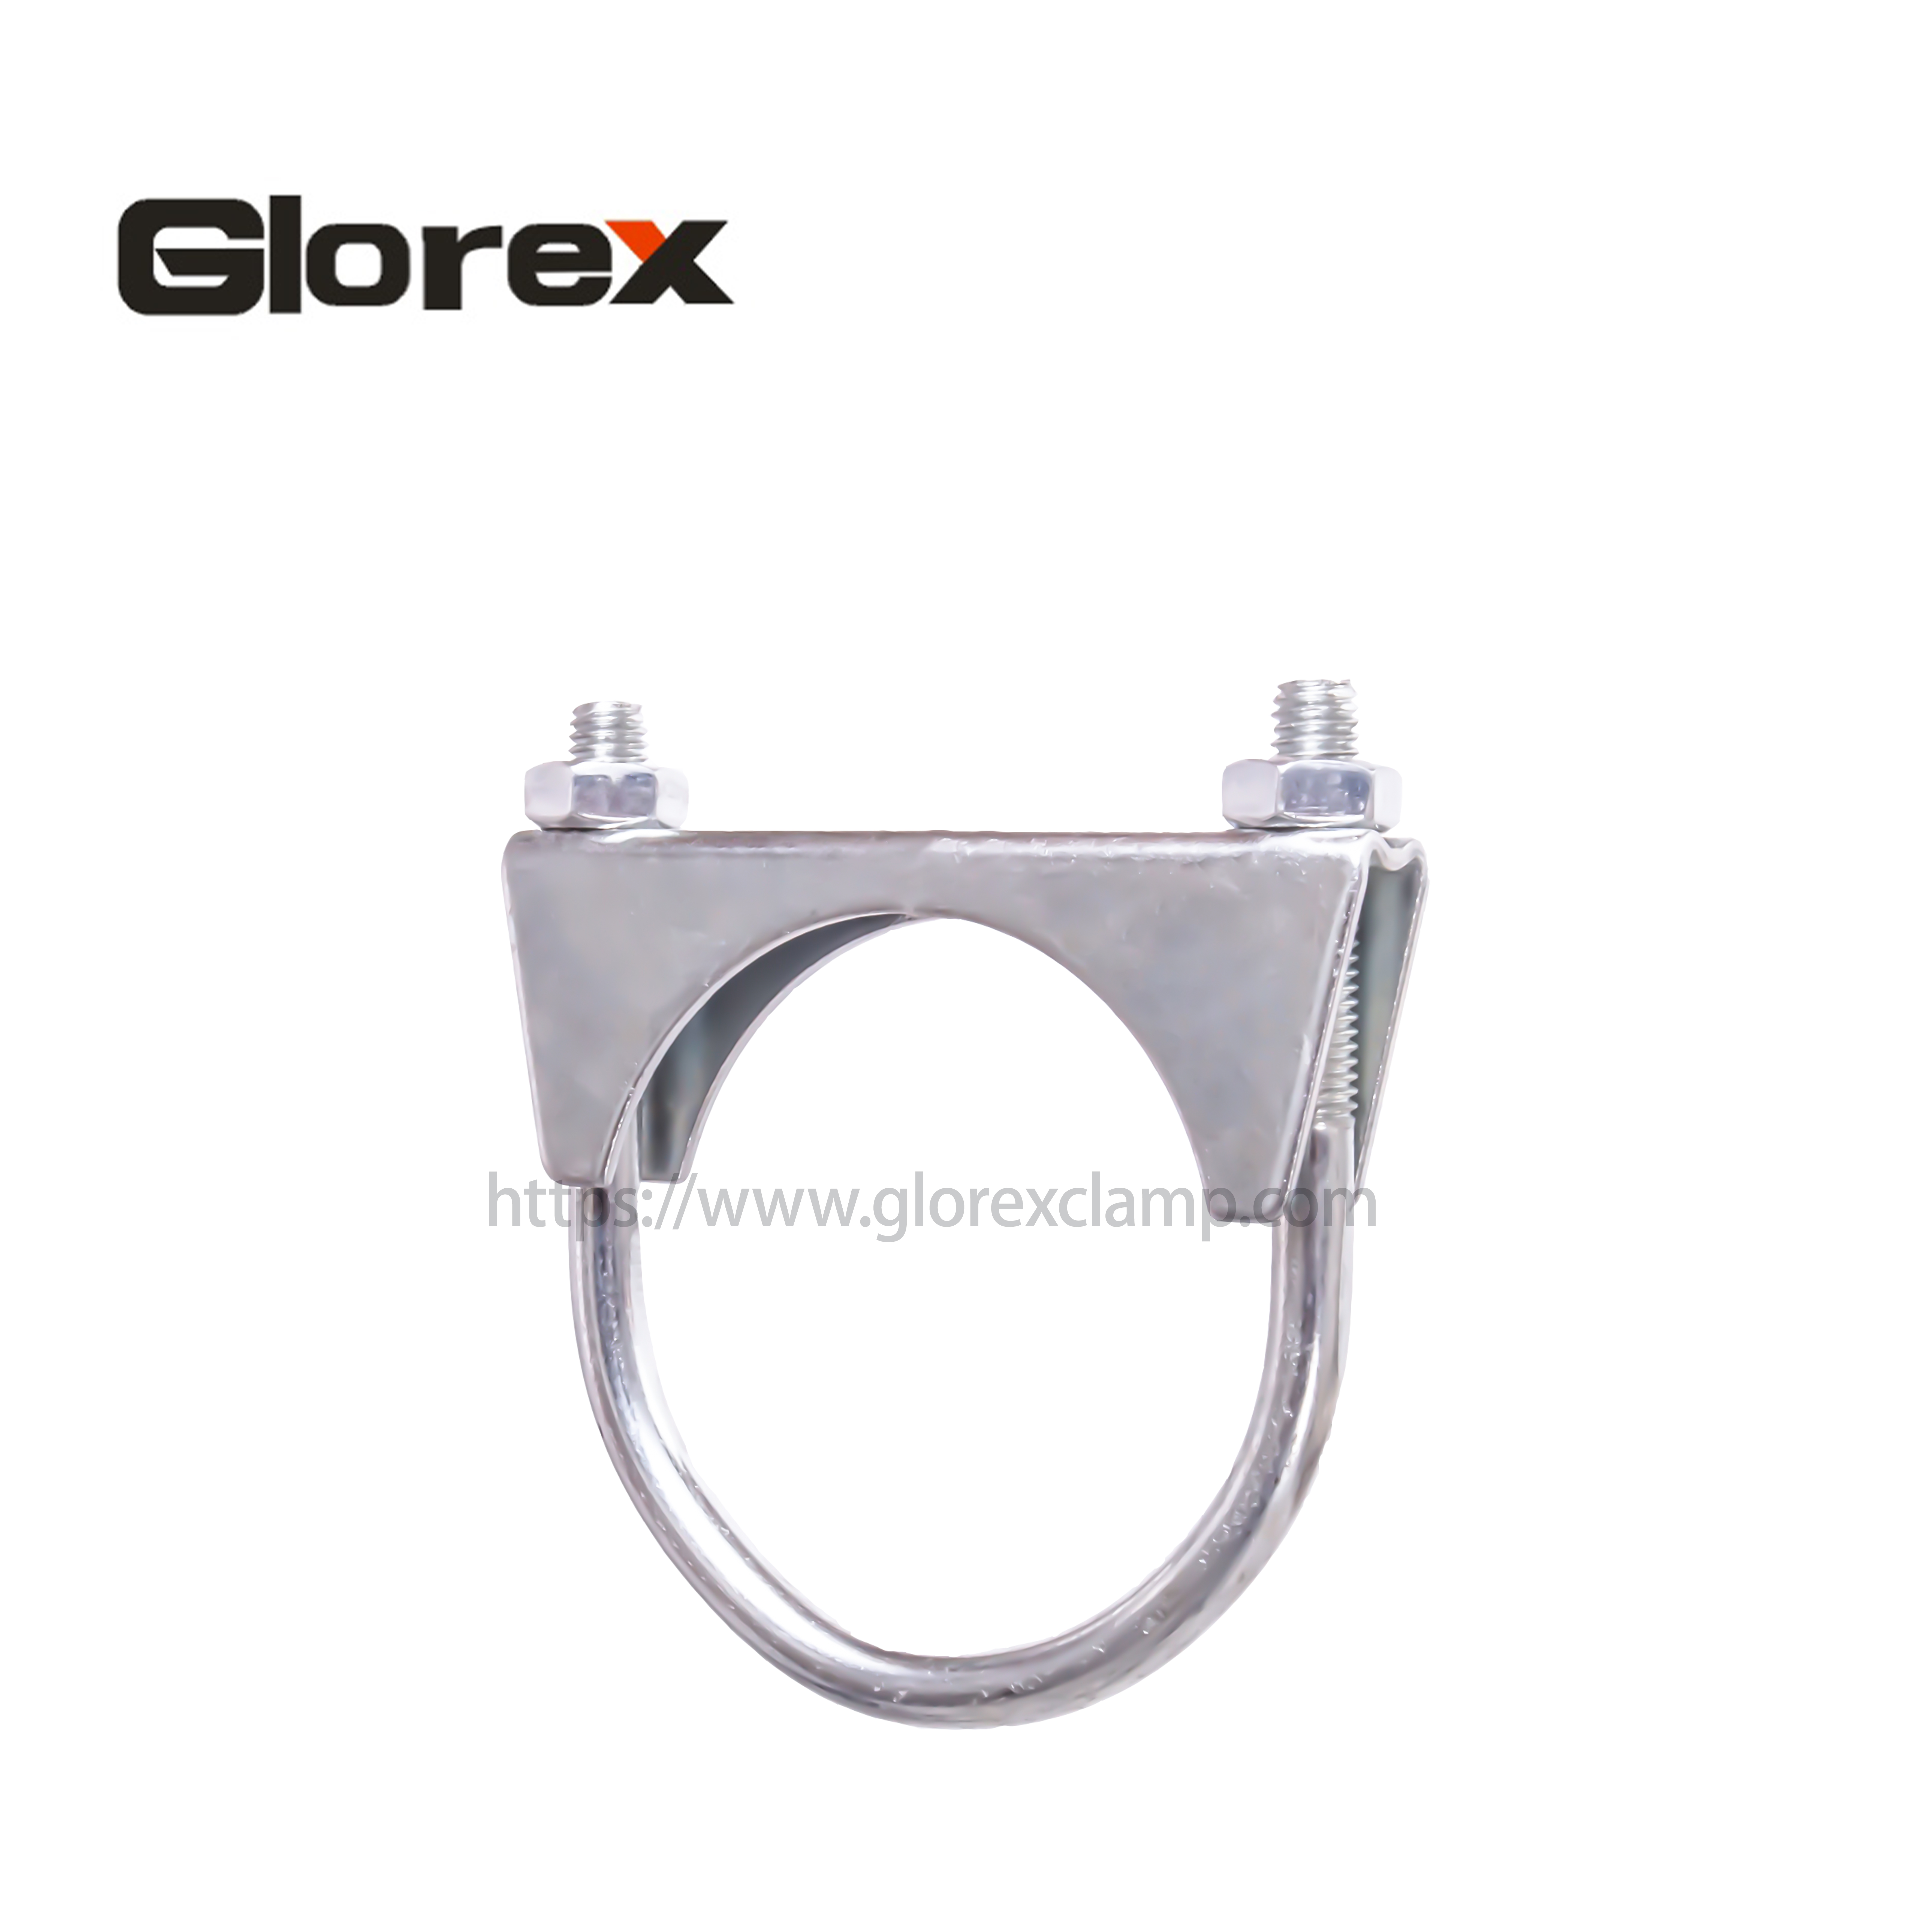 Wholesale Price Pipe Clamp Bracket - U-clamp – Glorex detail pictures